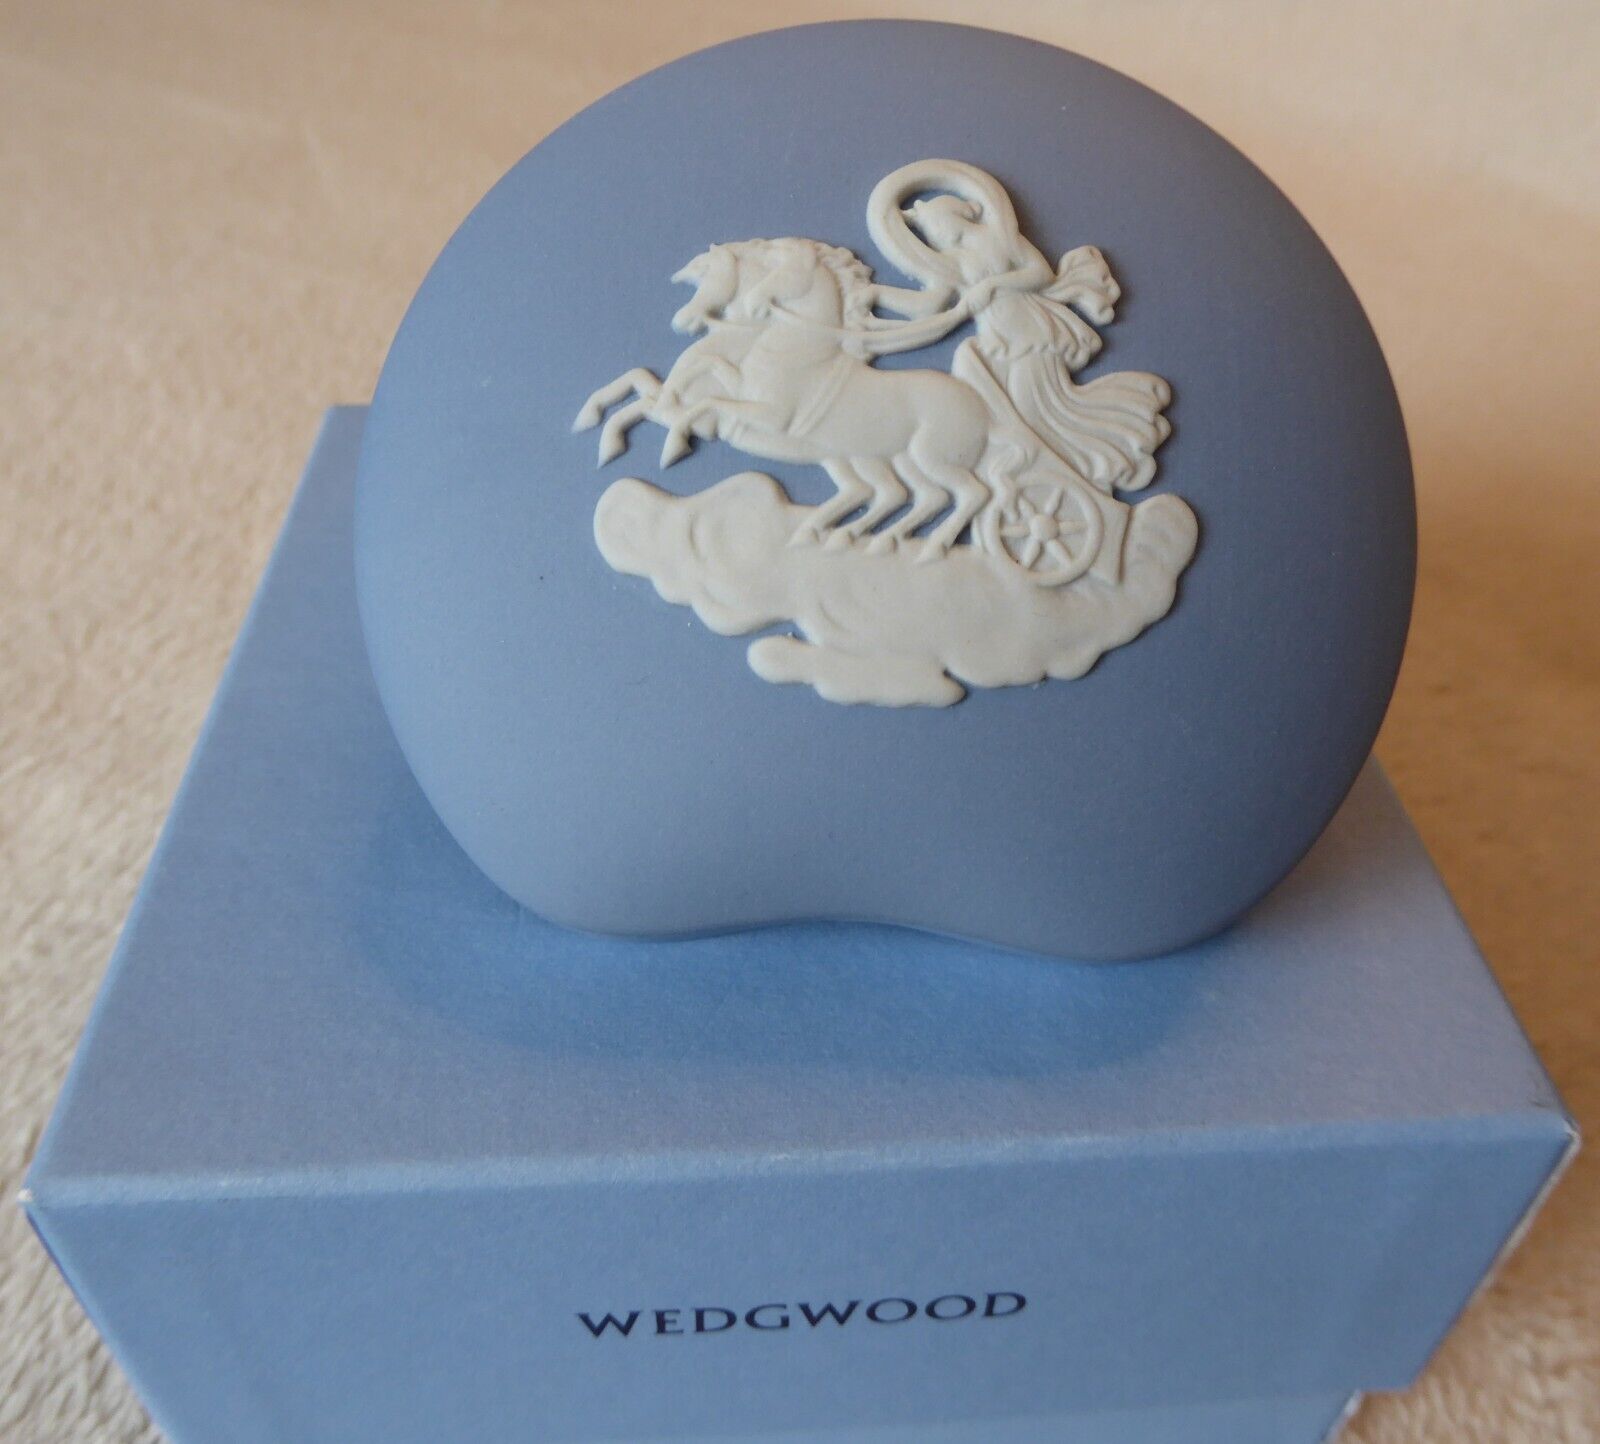 Wedgwood Jasperware pale blue Bean Shaped Trinket Box with Lid